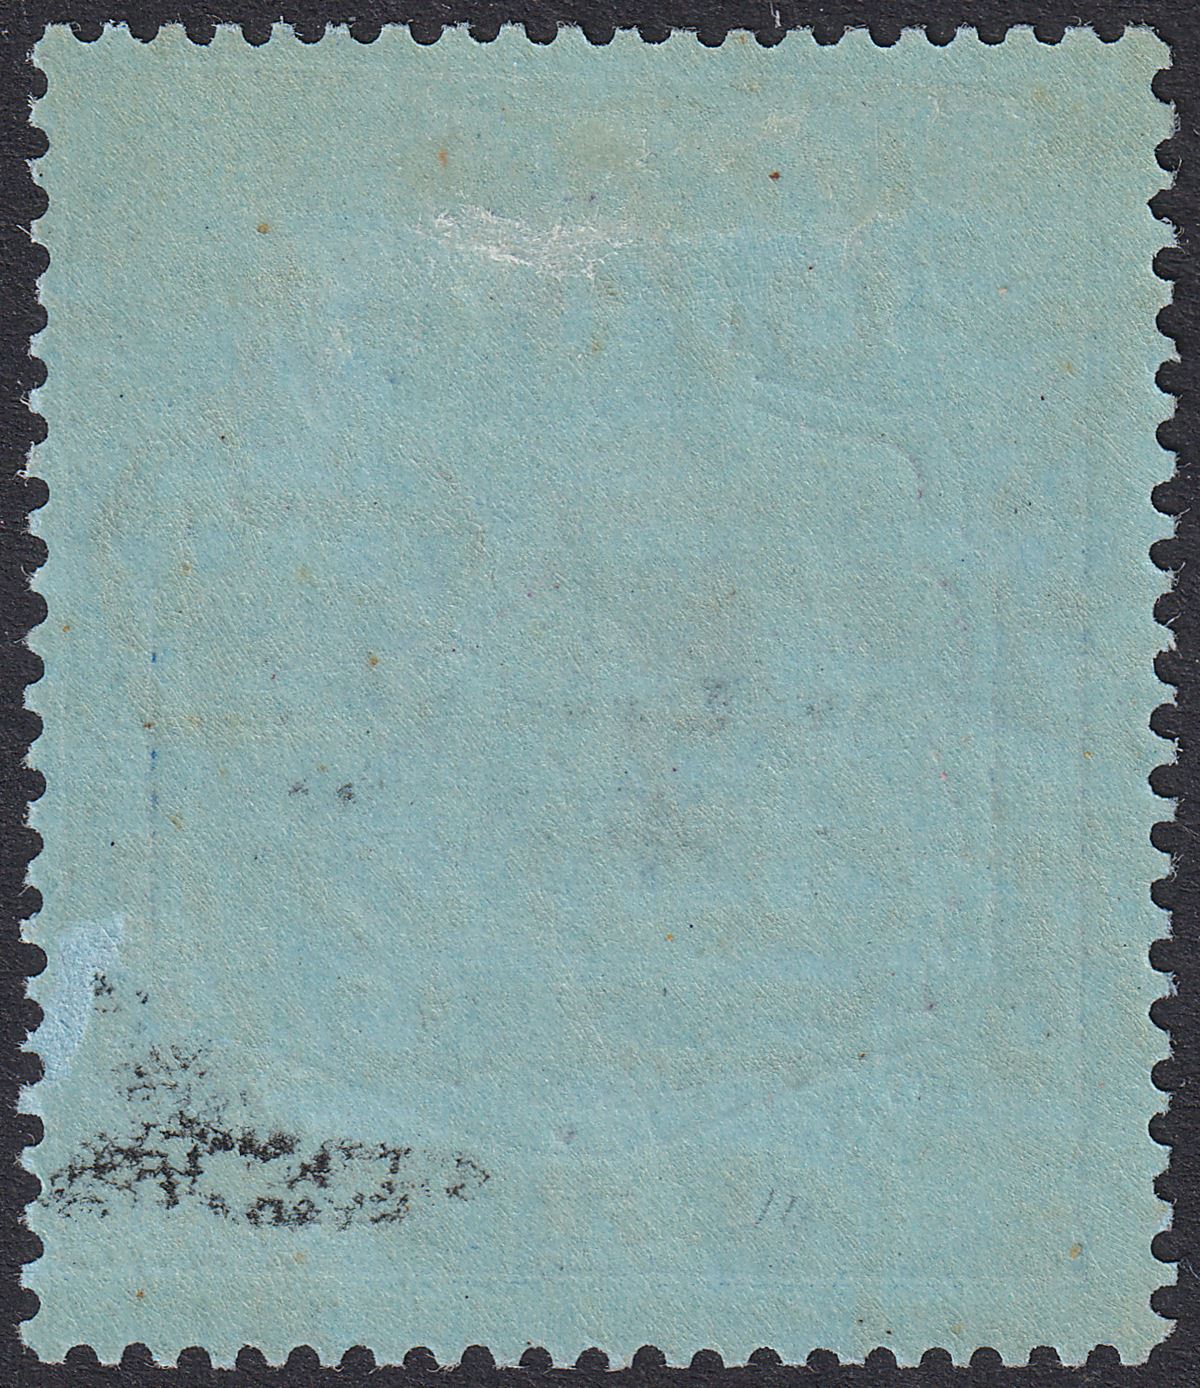 Bermuda 1943 KGVI 2sh Purple + Blue p14 Shading Omitted from Scroll Mint SG116db